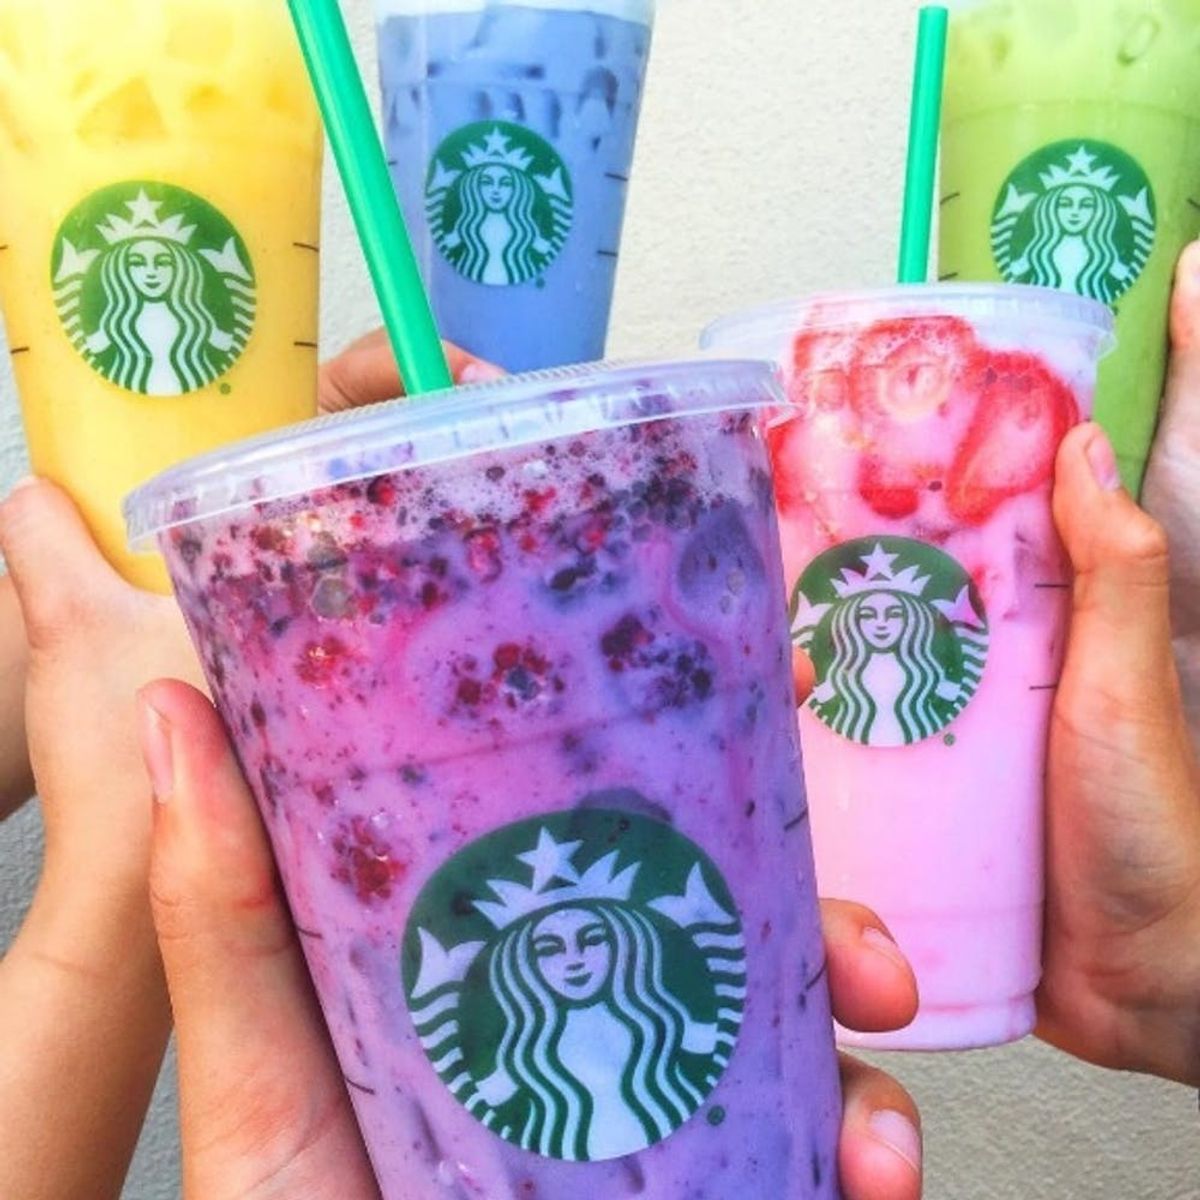 Starbucks’ Colorful “Secret” Drinks Now Span the Tasty Rainbow